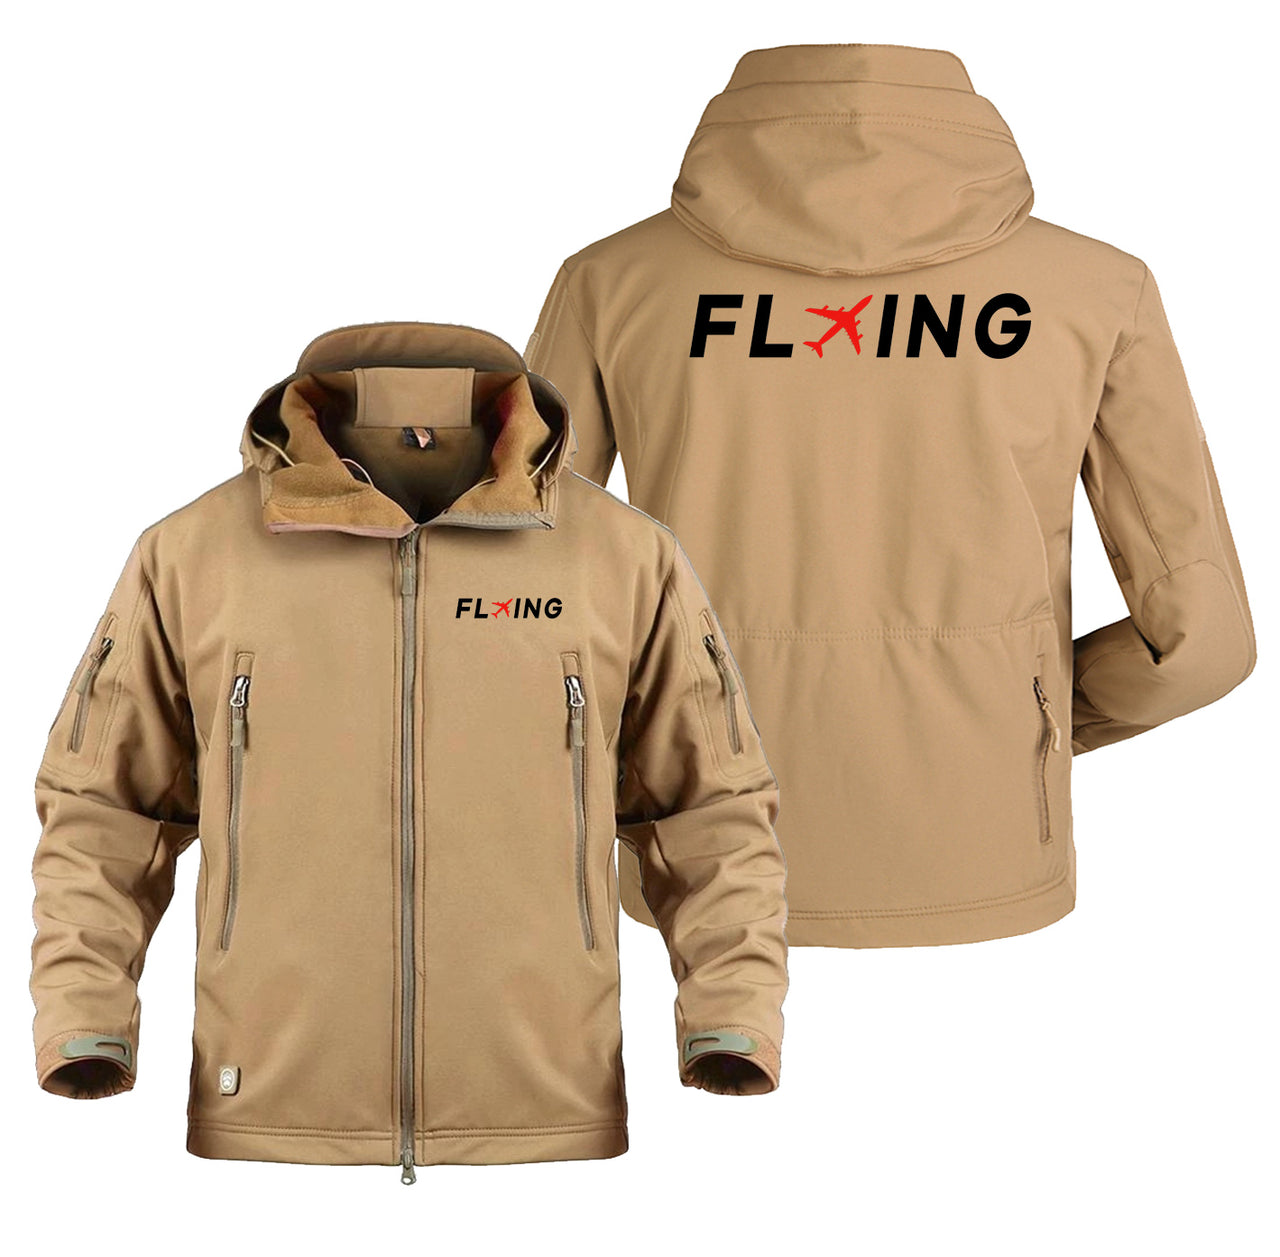 Flying Designed Military Jackets (Customizable)